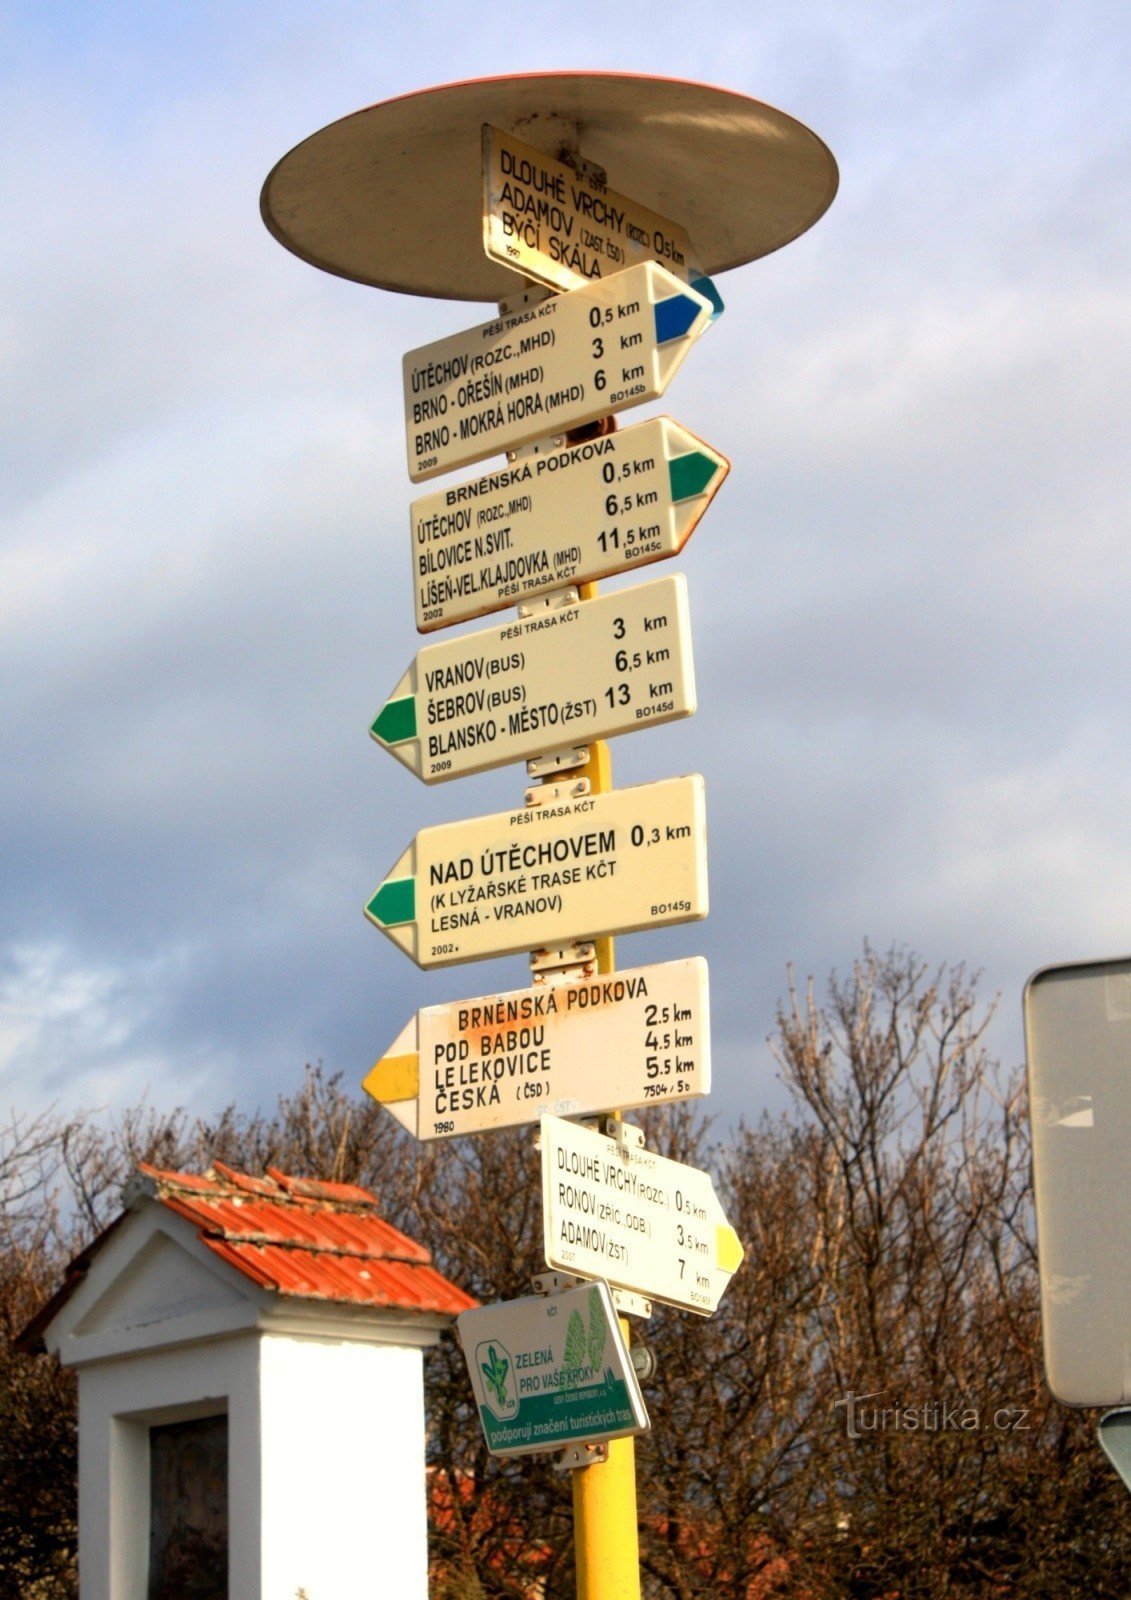 Brno-Útěchov - main direction